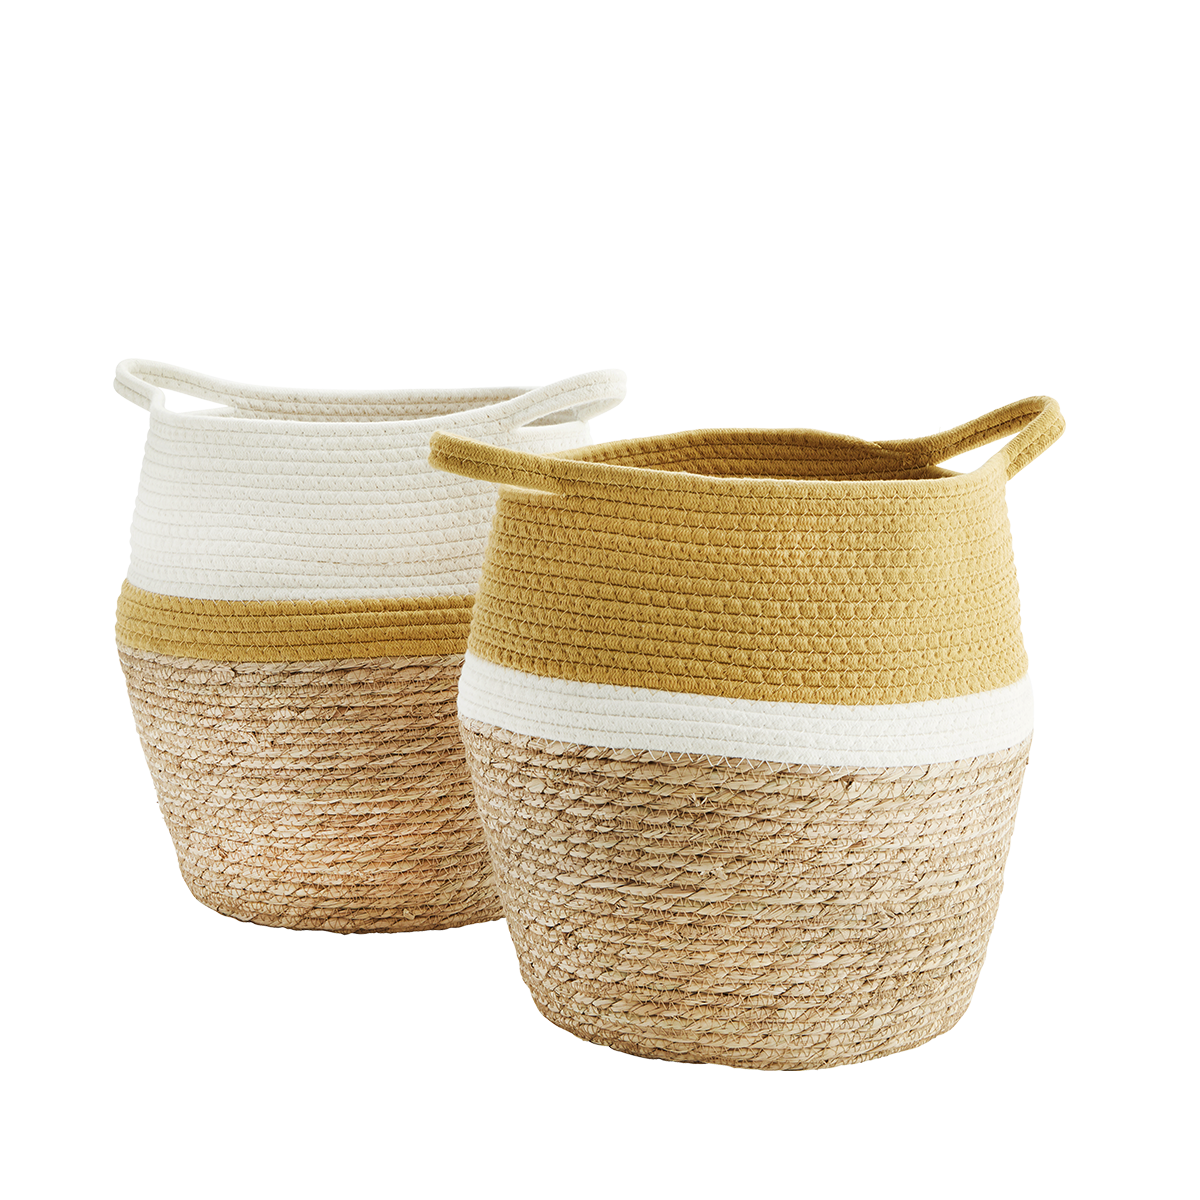 Rush baskets w/ cotton